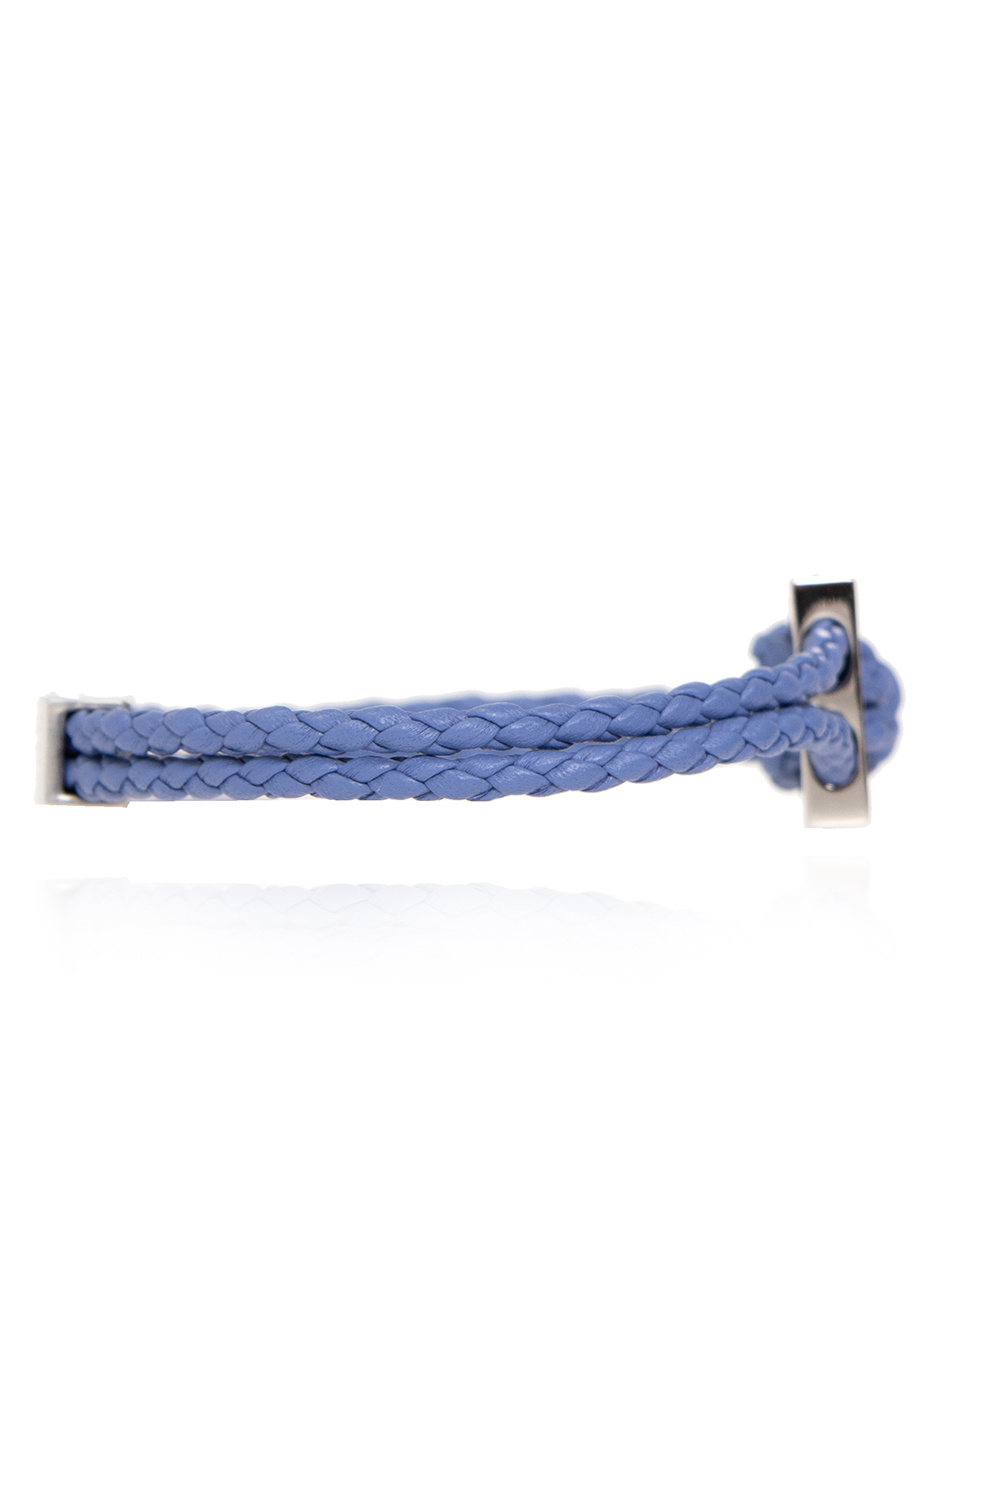 Salvatore Ferragamo Leather bracelet